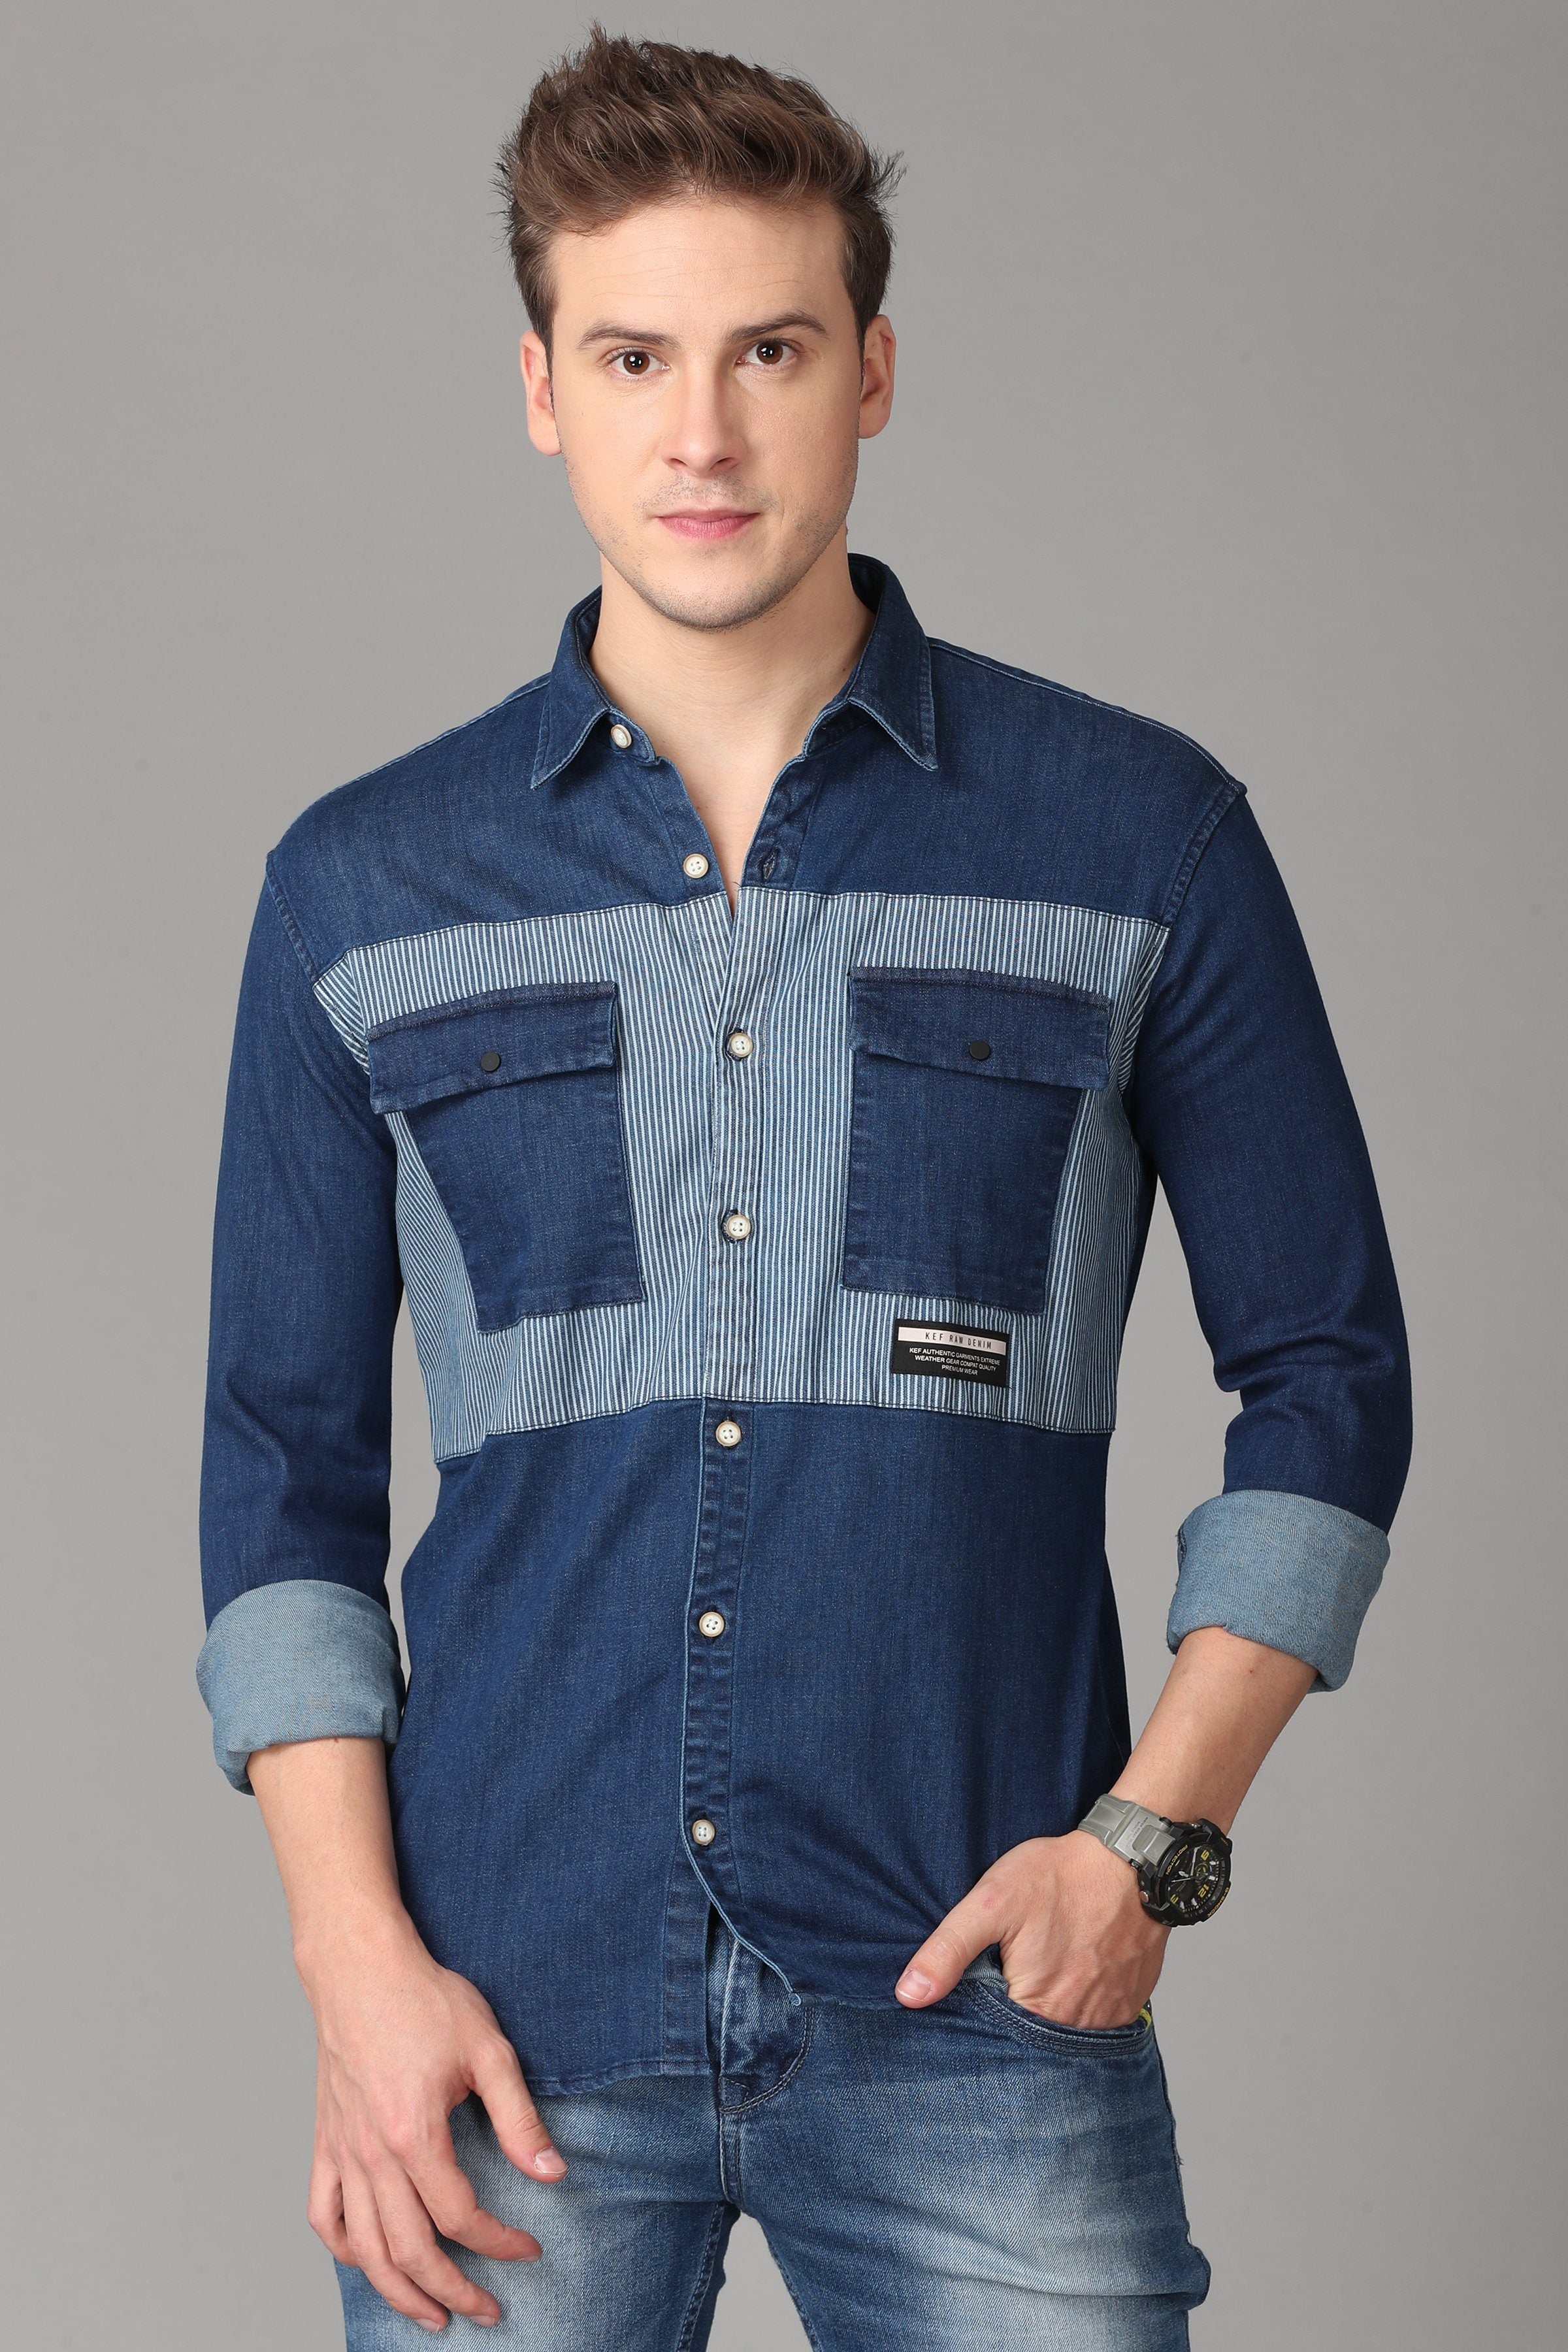 Blue and Grey Denim Shirt - Blue Pocket Shirts KEF S 